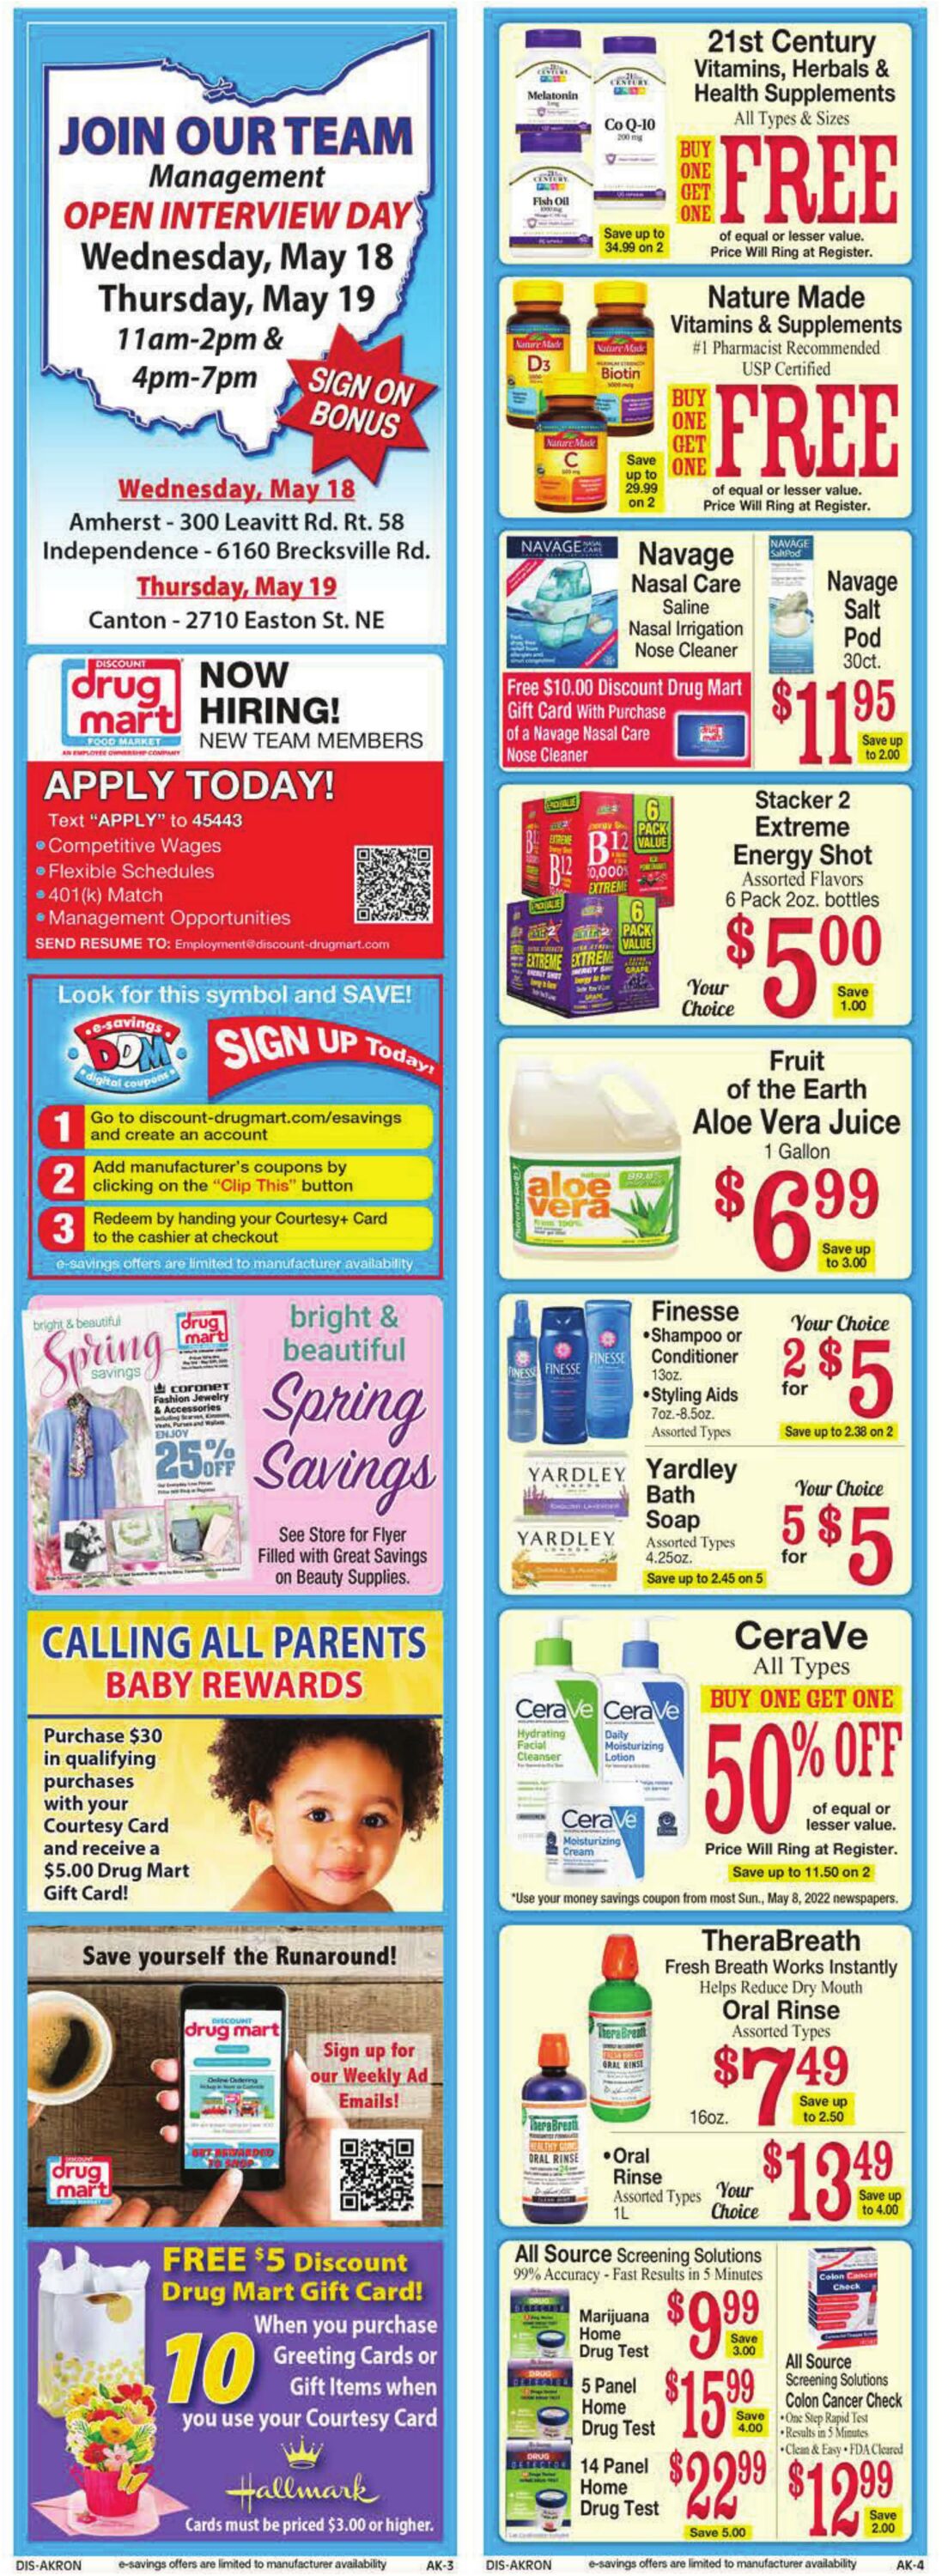 Weekly ad Discount Drug Mart 05/11/2022 - 05/17/2022